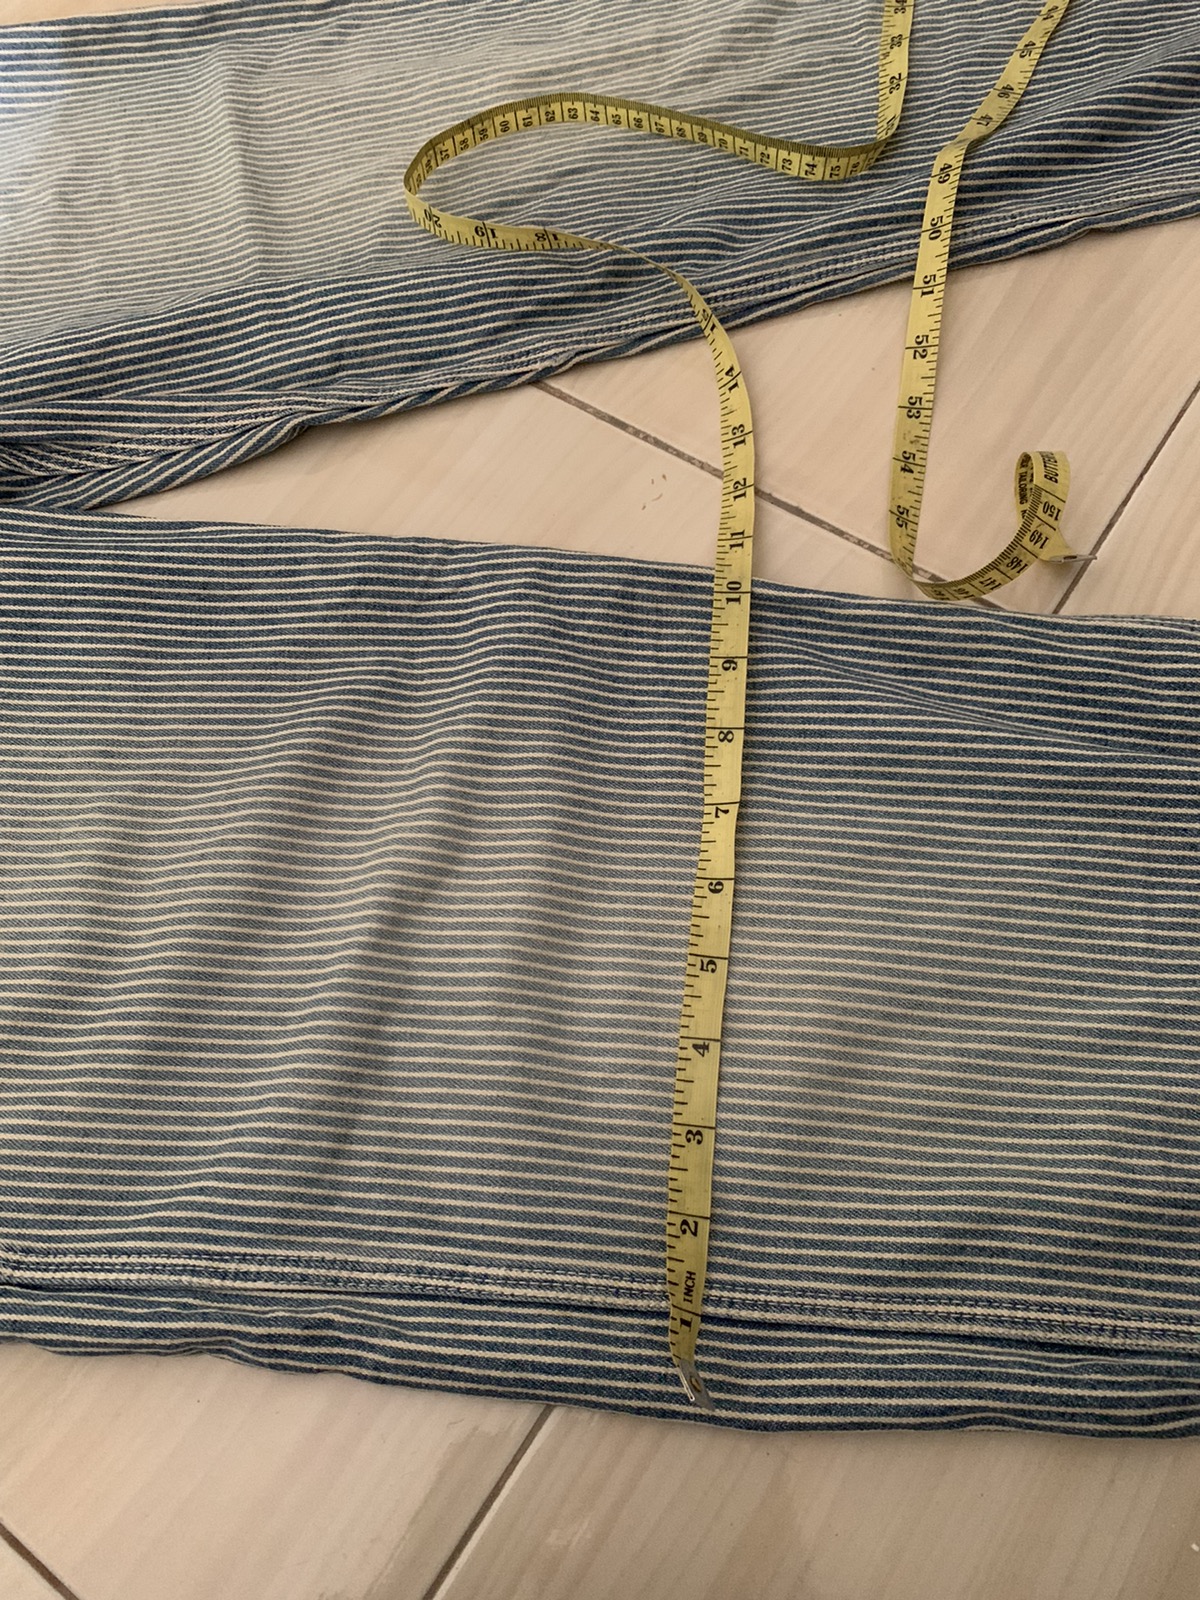 Vintage - RARE 💥 carhatt overalls nice design - 19